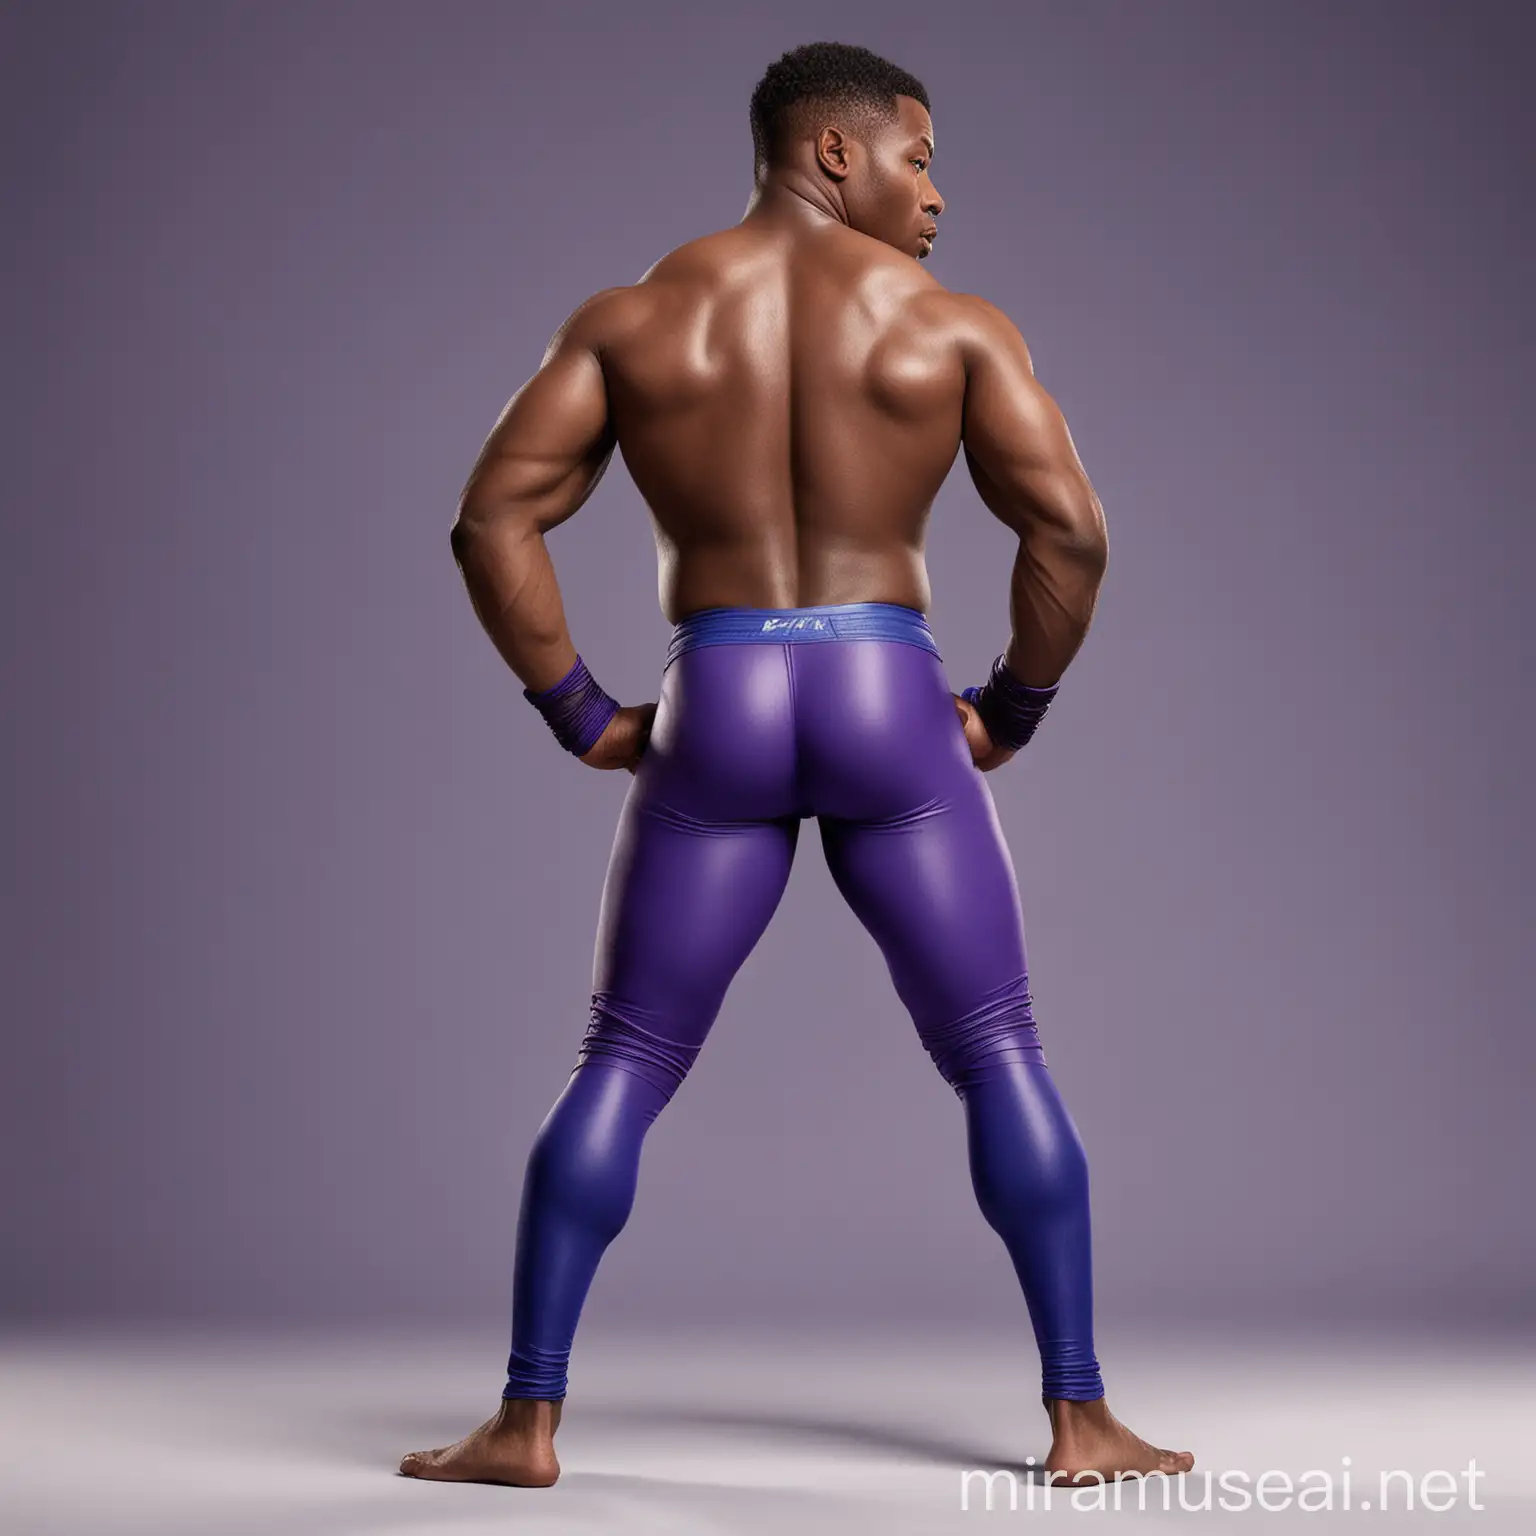 African American Wrestler in Vibrant Blue and Black Spandex Leggings